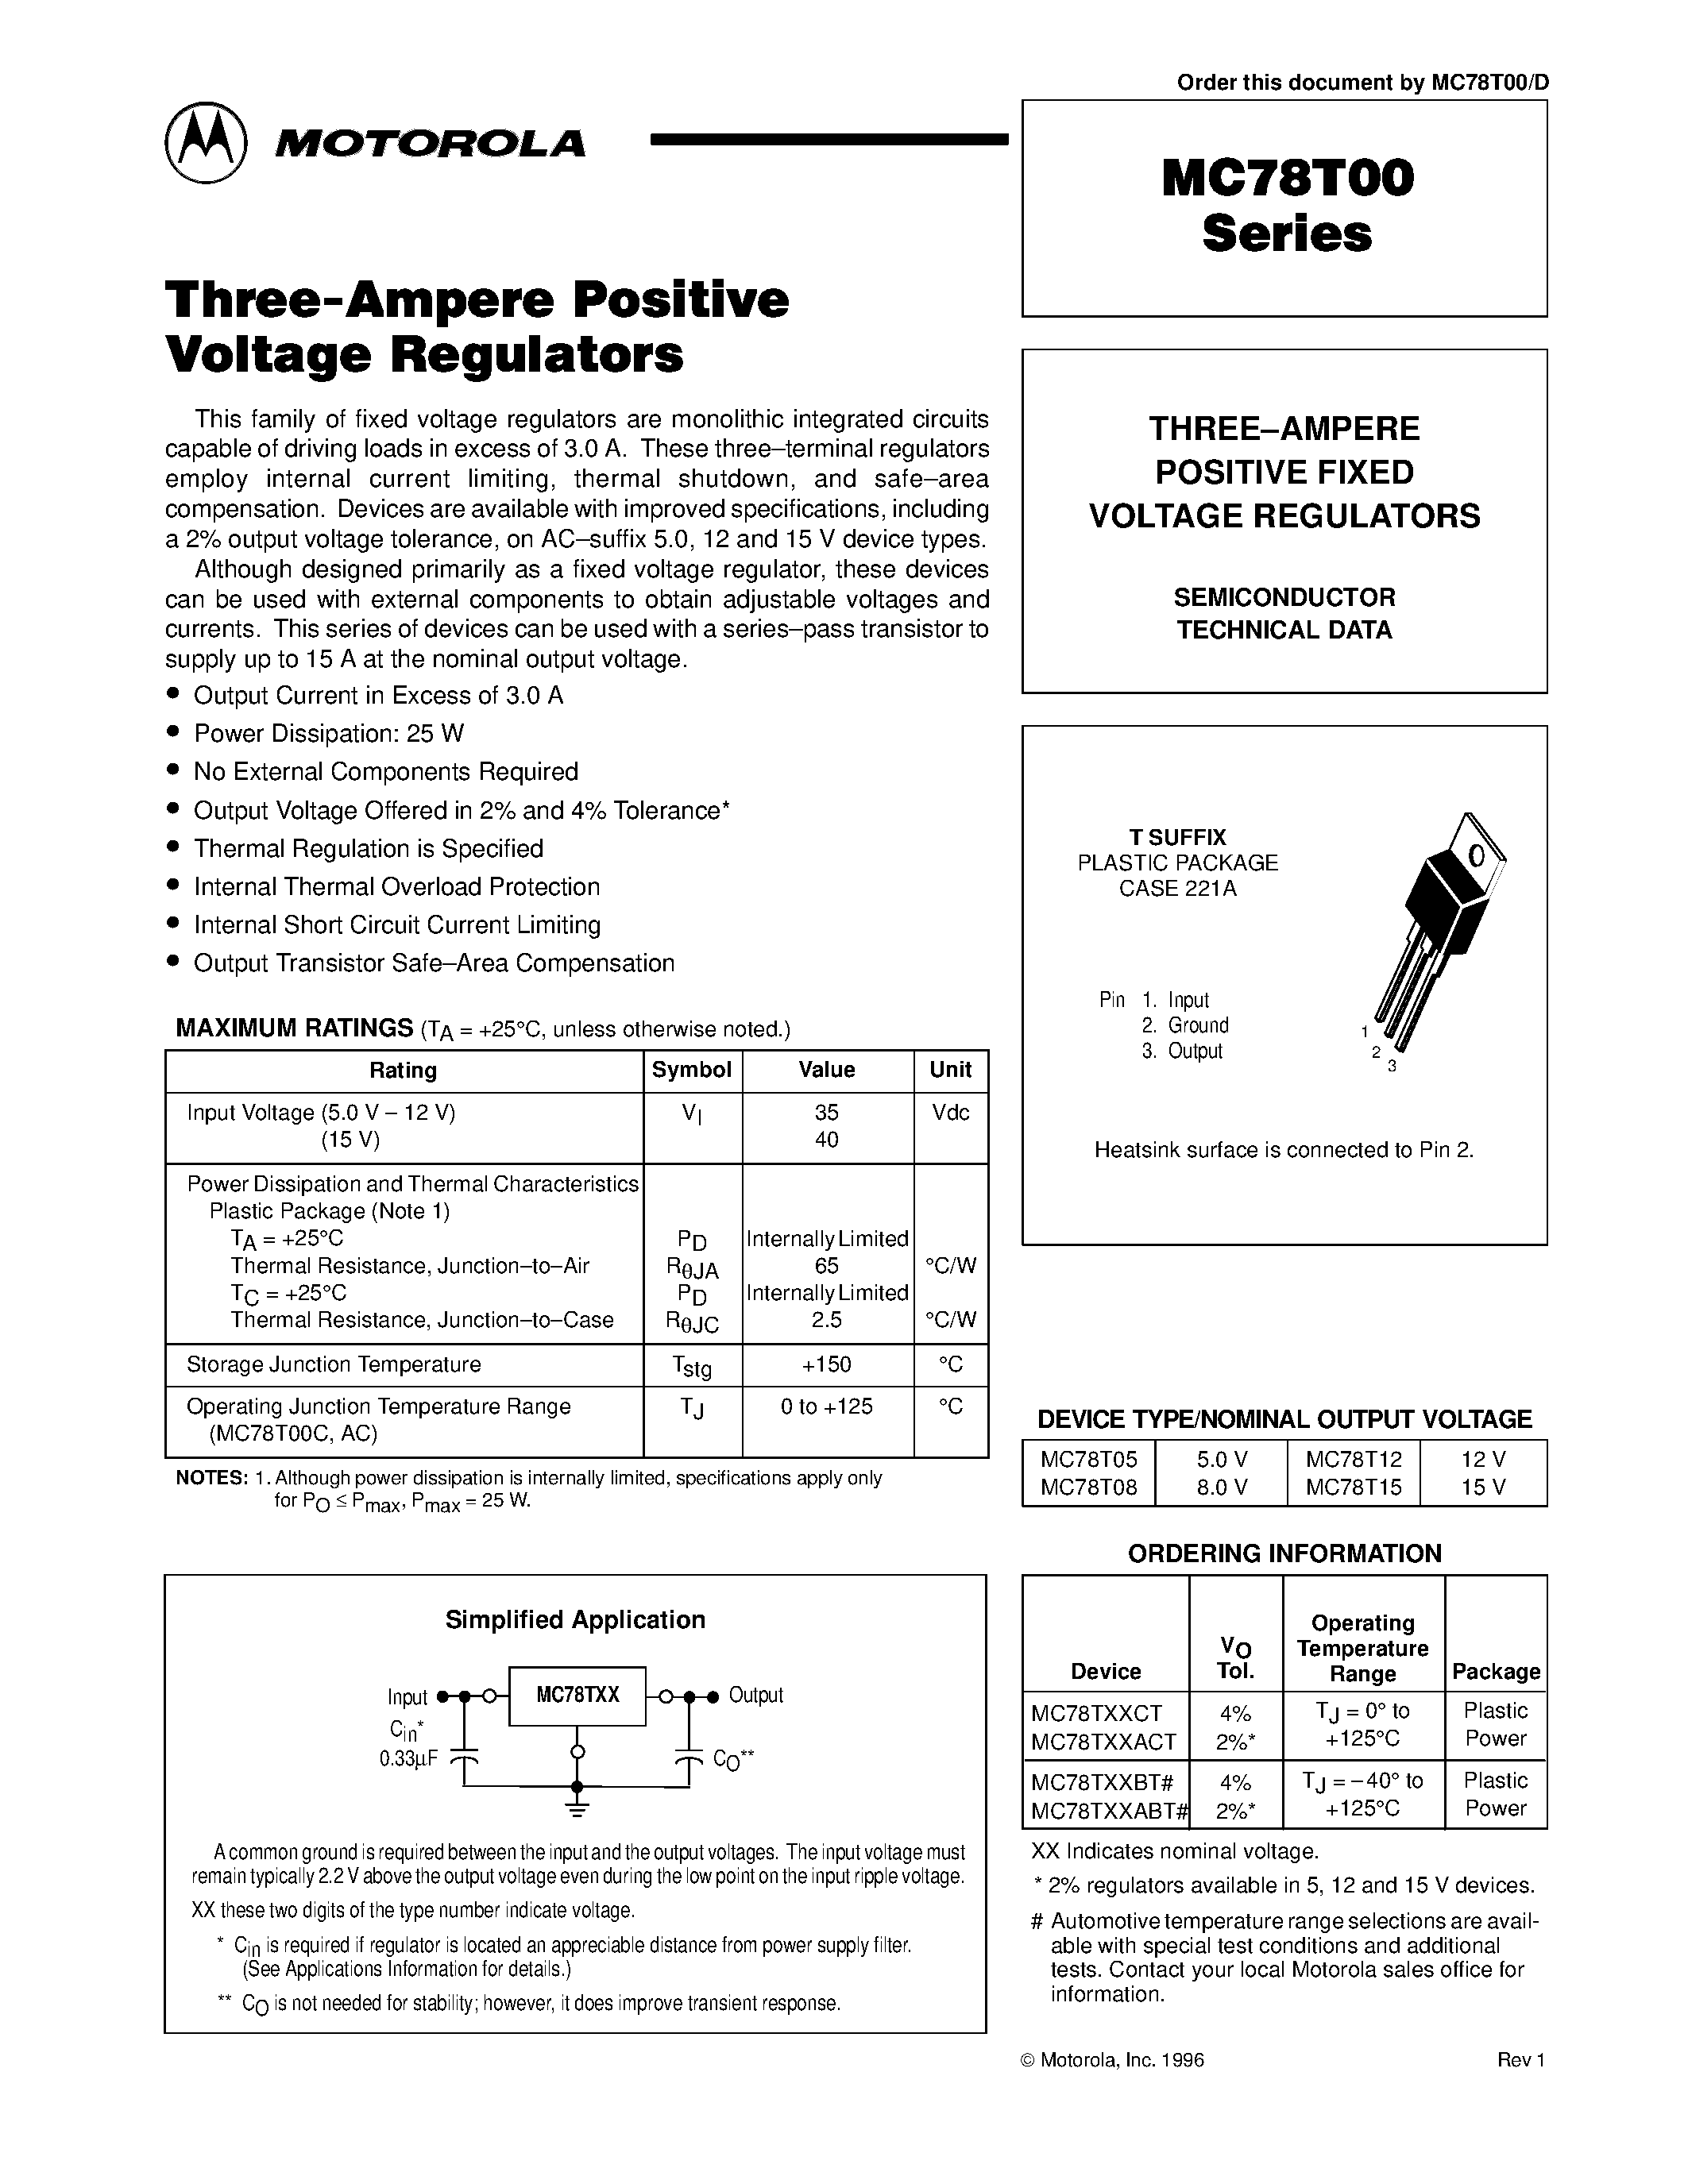 Datasheet MC78T05CD2T - THREE-AMPERE POSITIVE FIXED VOLTAGE REGULATORS page 1